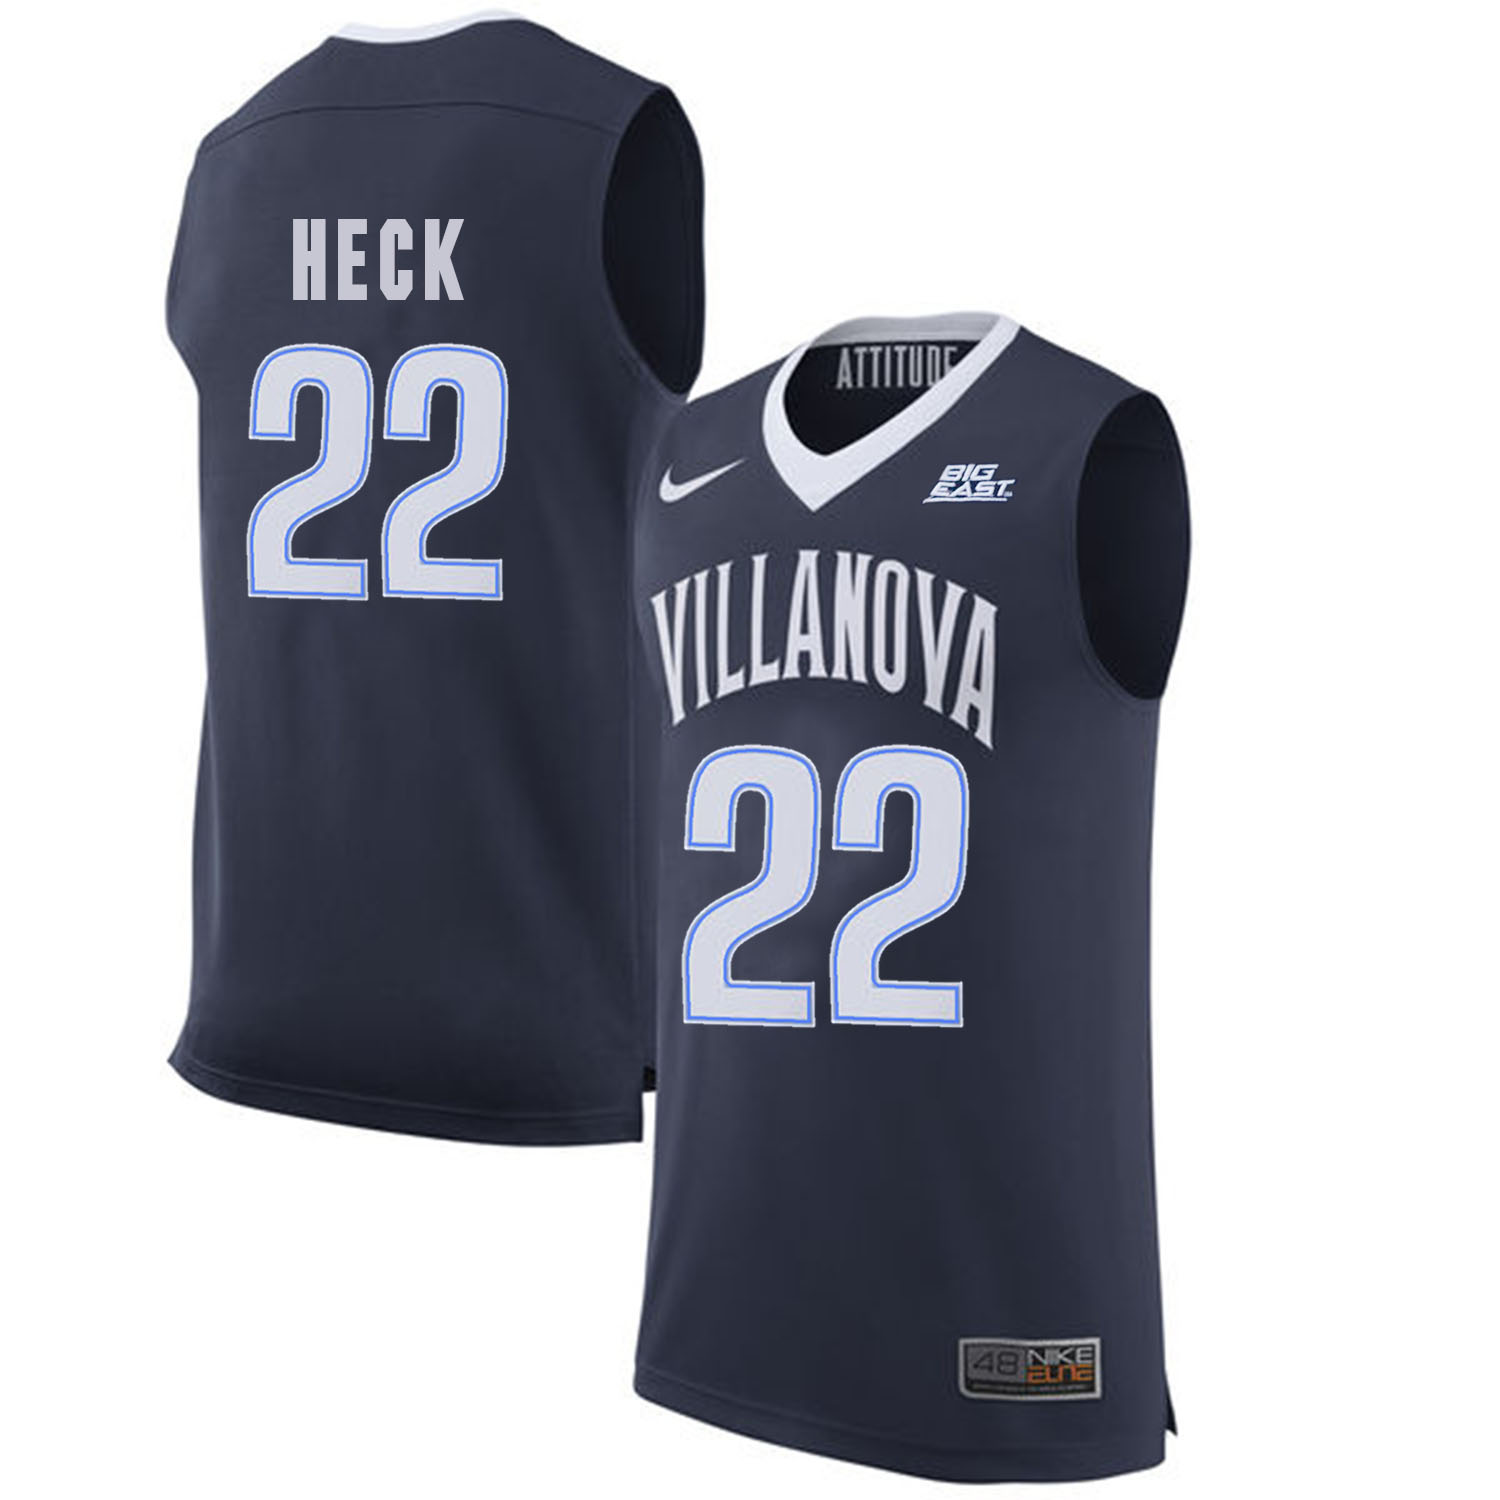 Villanova Wildcats 22 Peyton Heck Navy College Basketball Elite Jersey